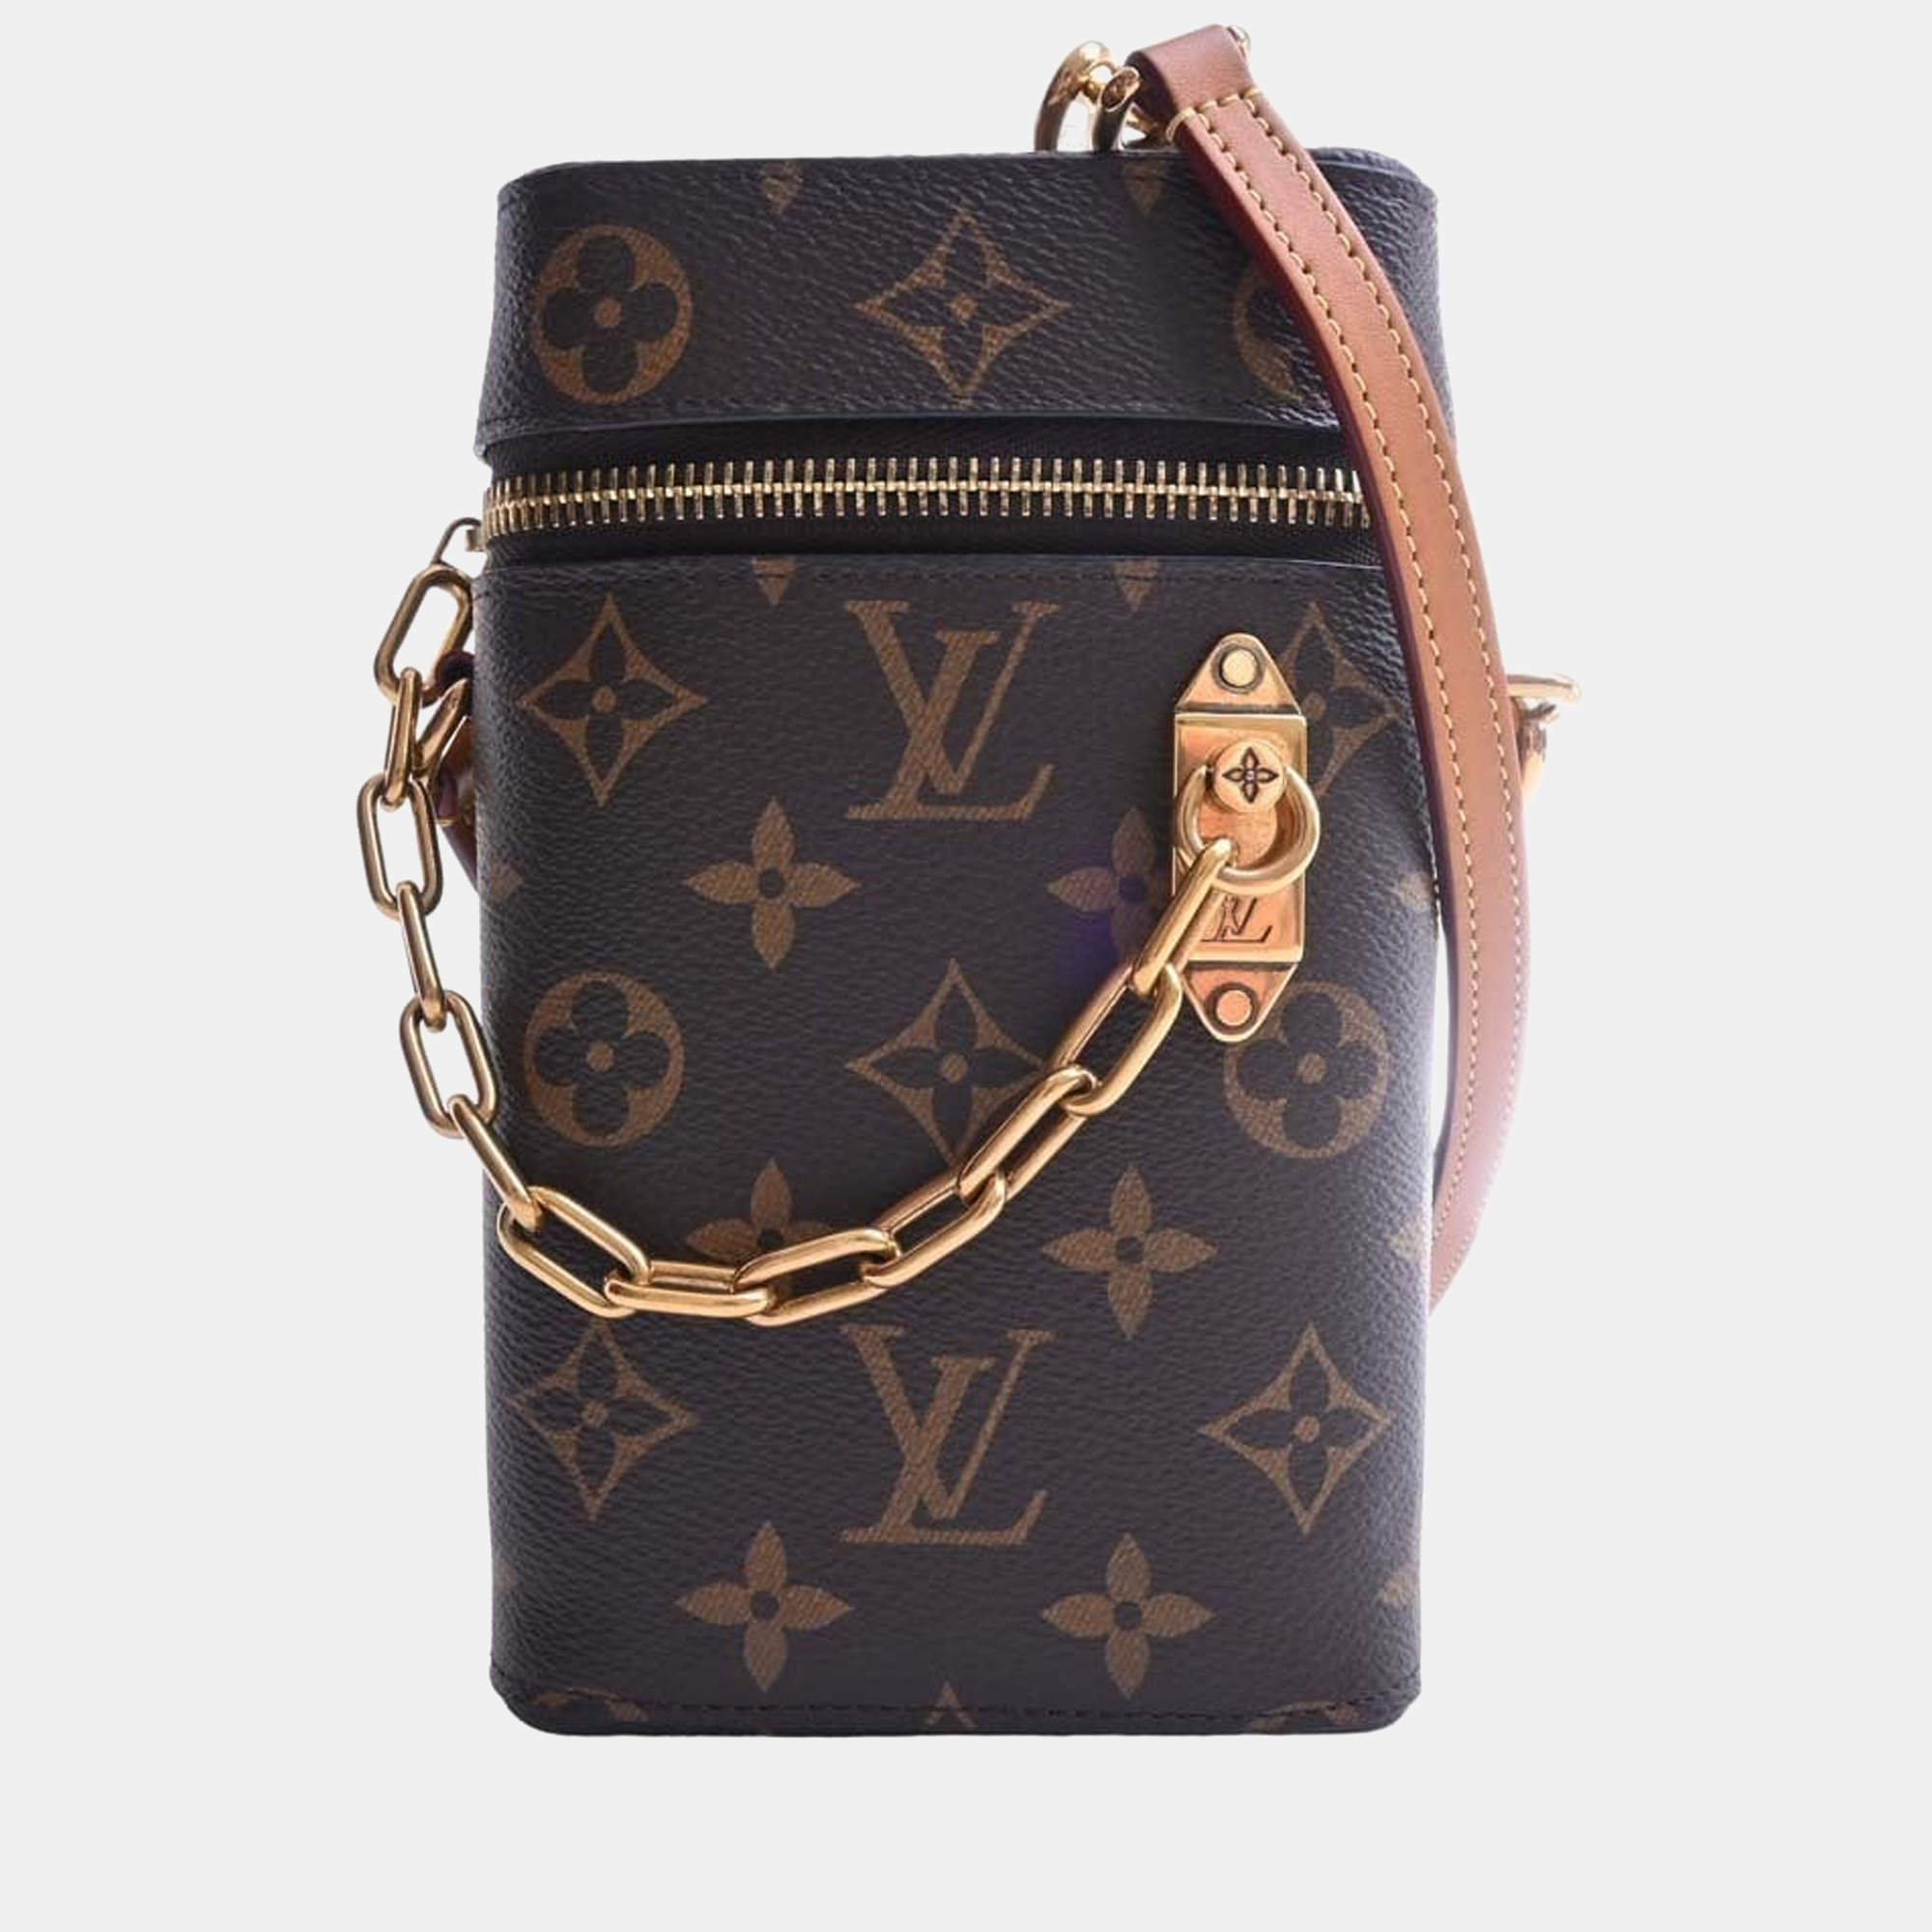 lv box purse